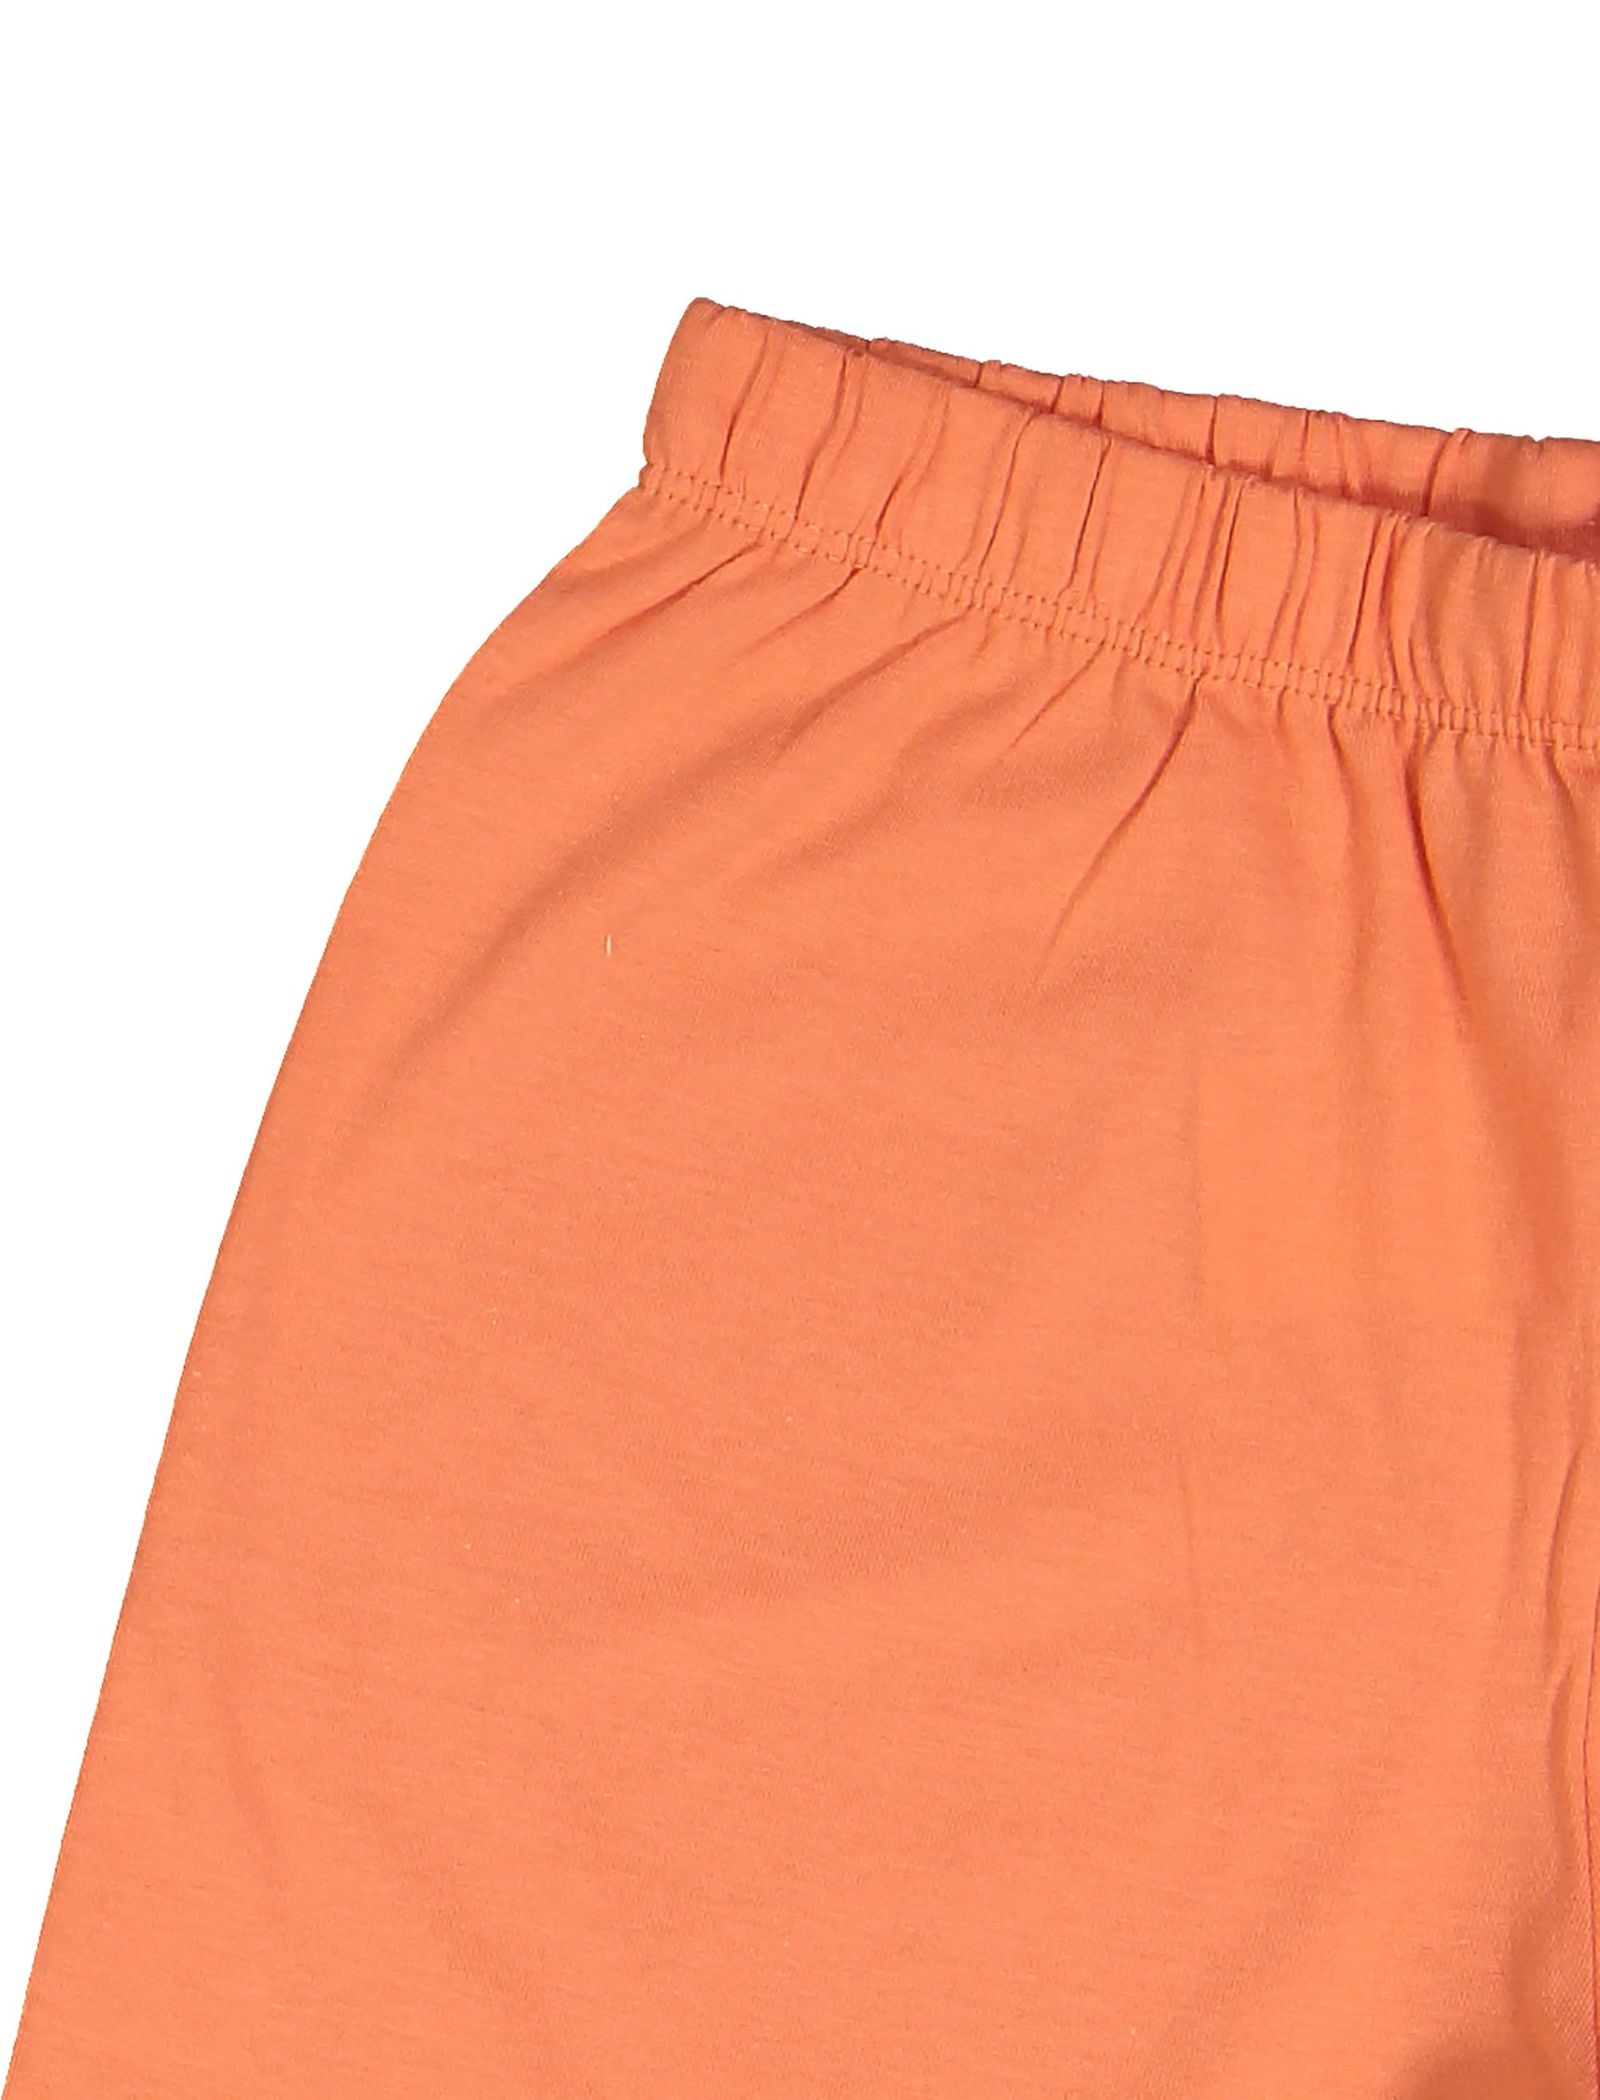 تی شرت و شلوارک نخی پسرانه - بلوکیدز - سفيد/نارنجي - 5